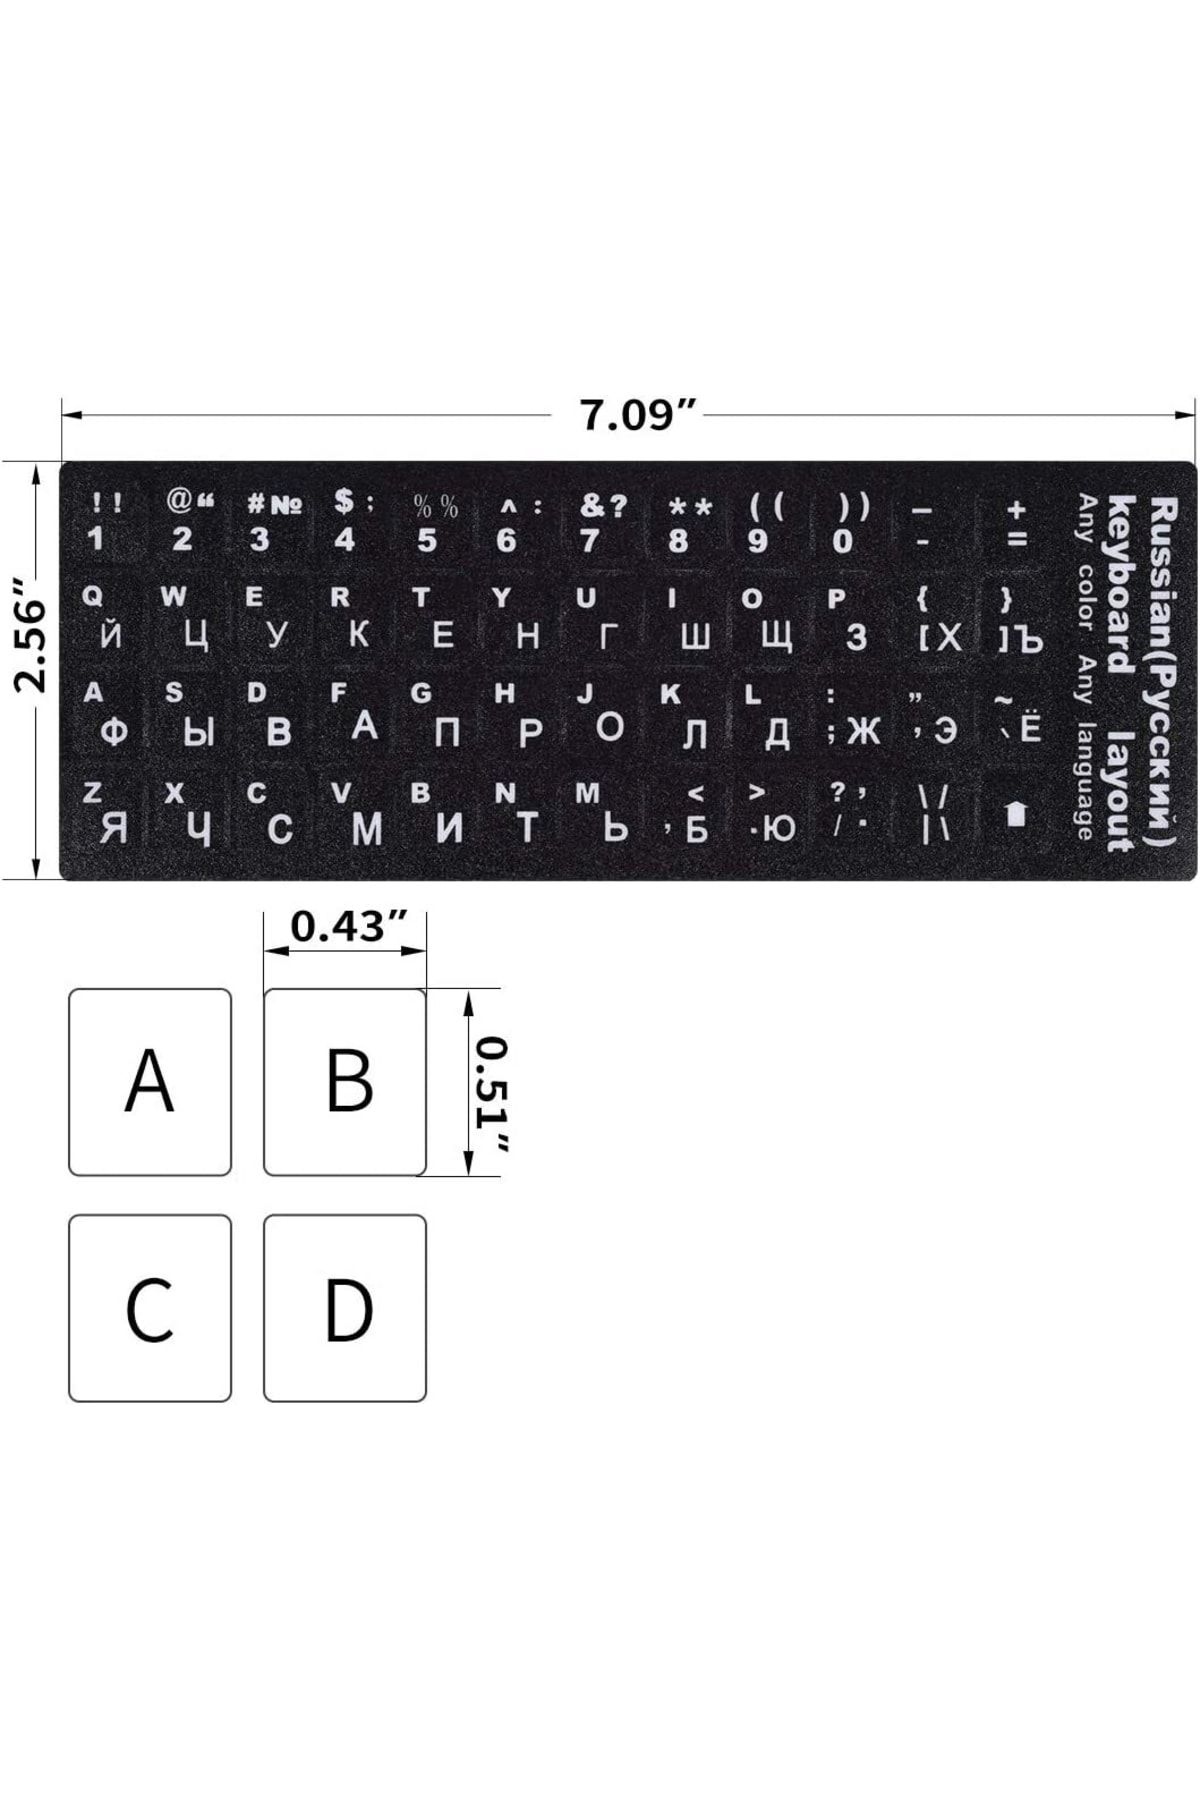 KLASİST Rusça Klavye Tuş Takımı Stıcker Etiketi Russian Keyboard Stickers Hd3494 Kaliteli